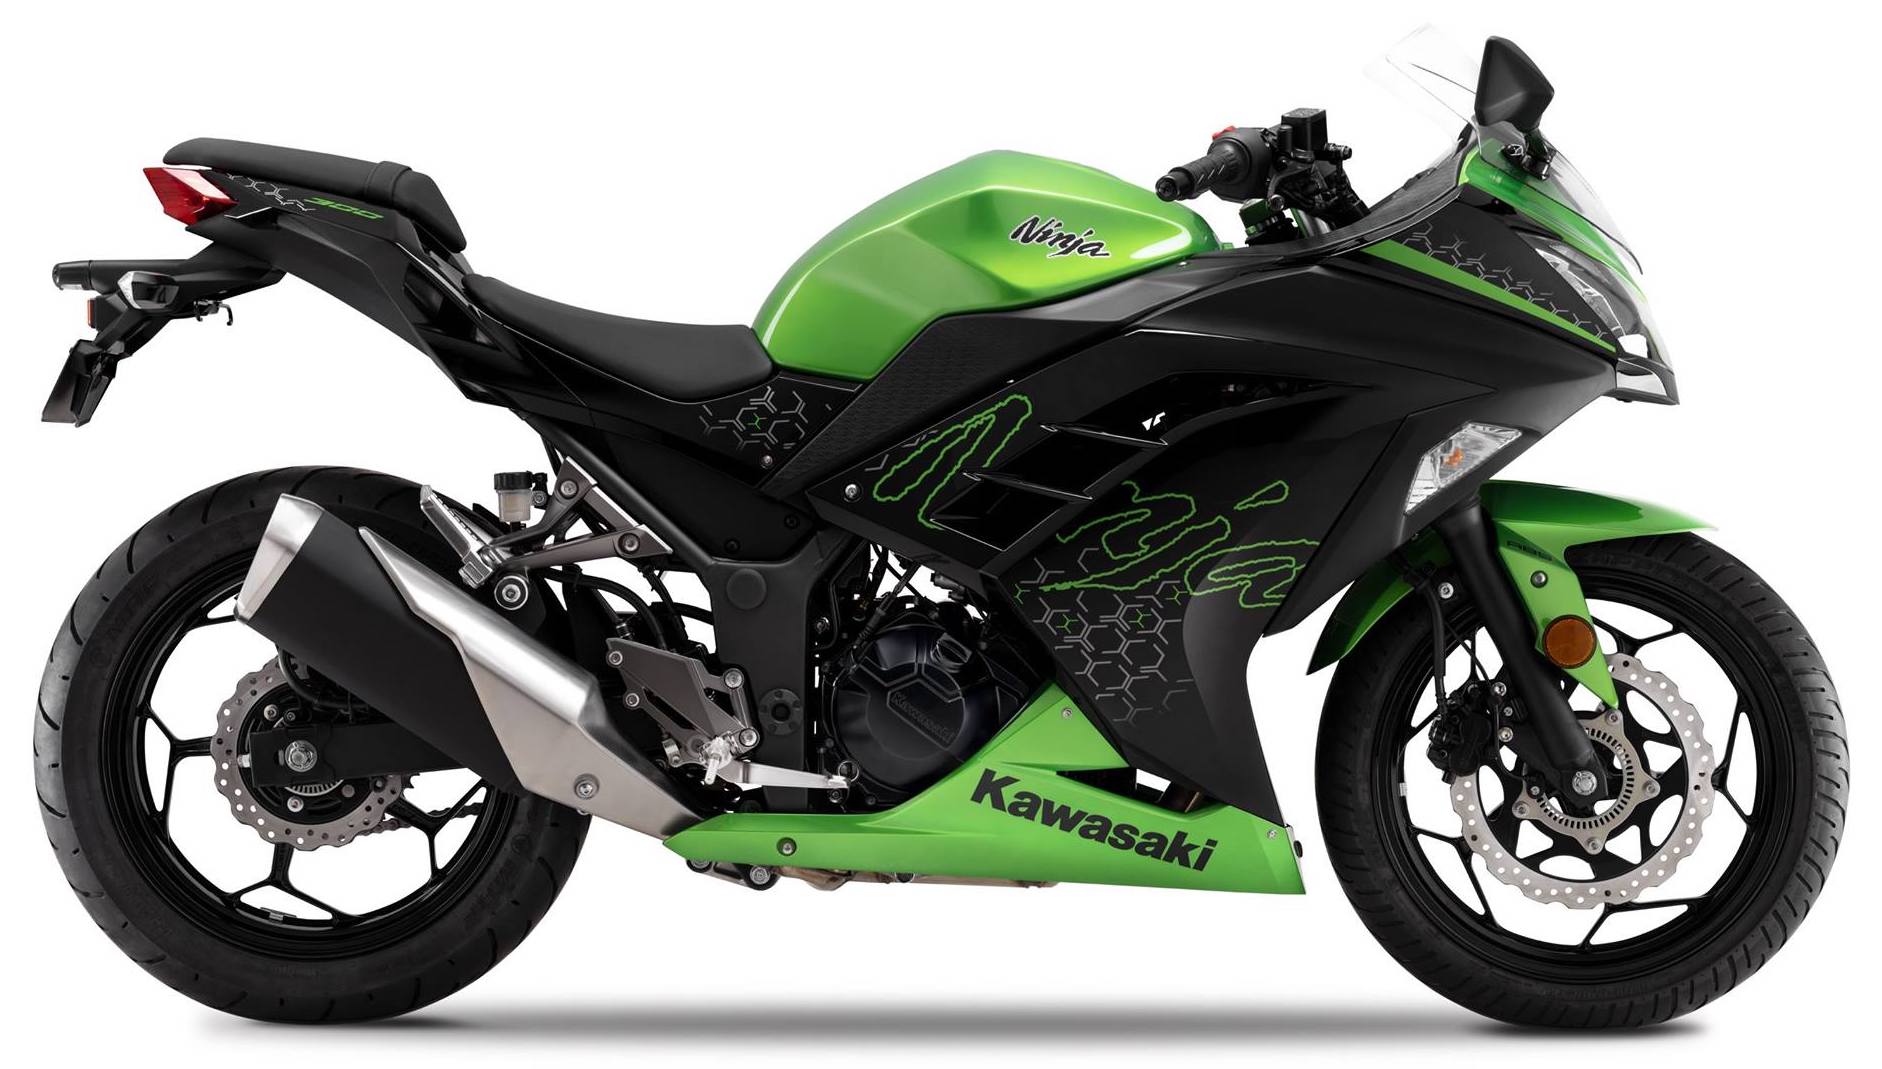 MY2021 Kawasaki Ninja 300 Green-Black